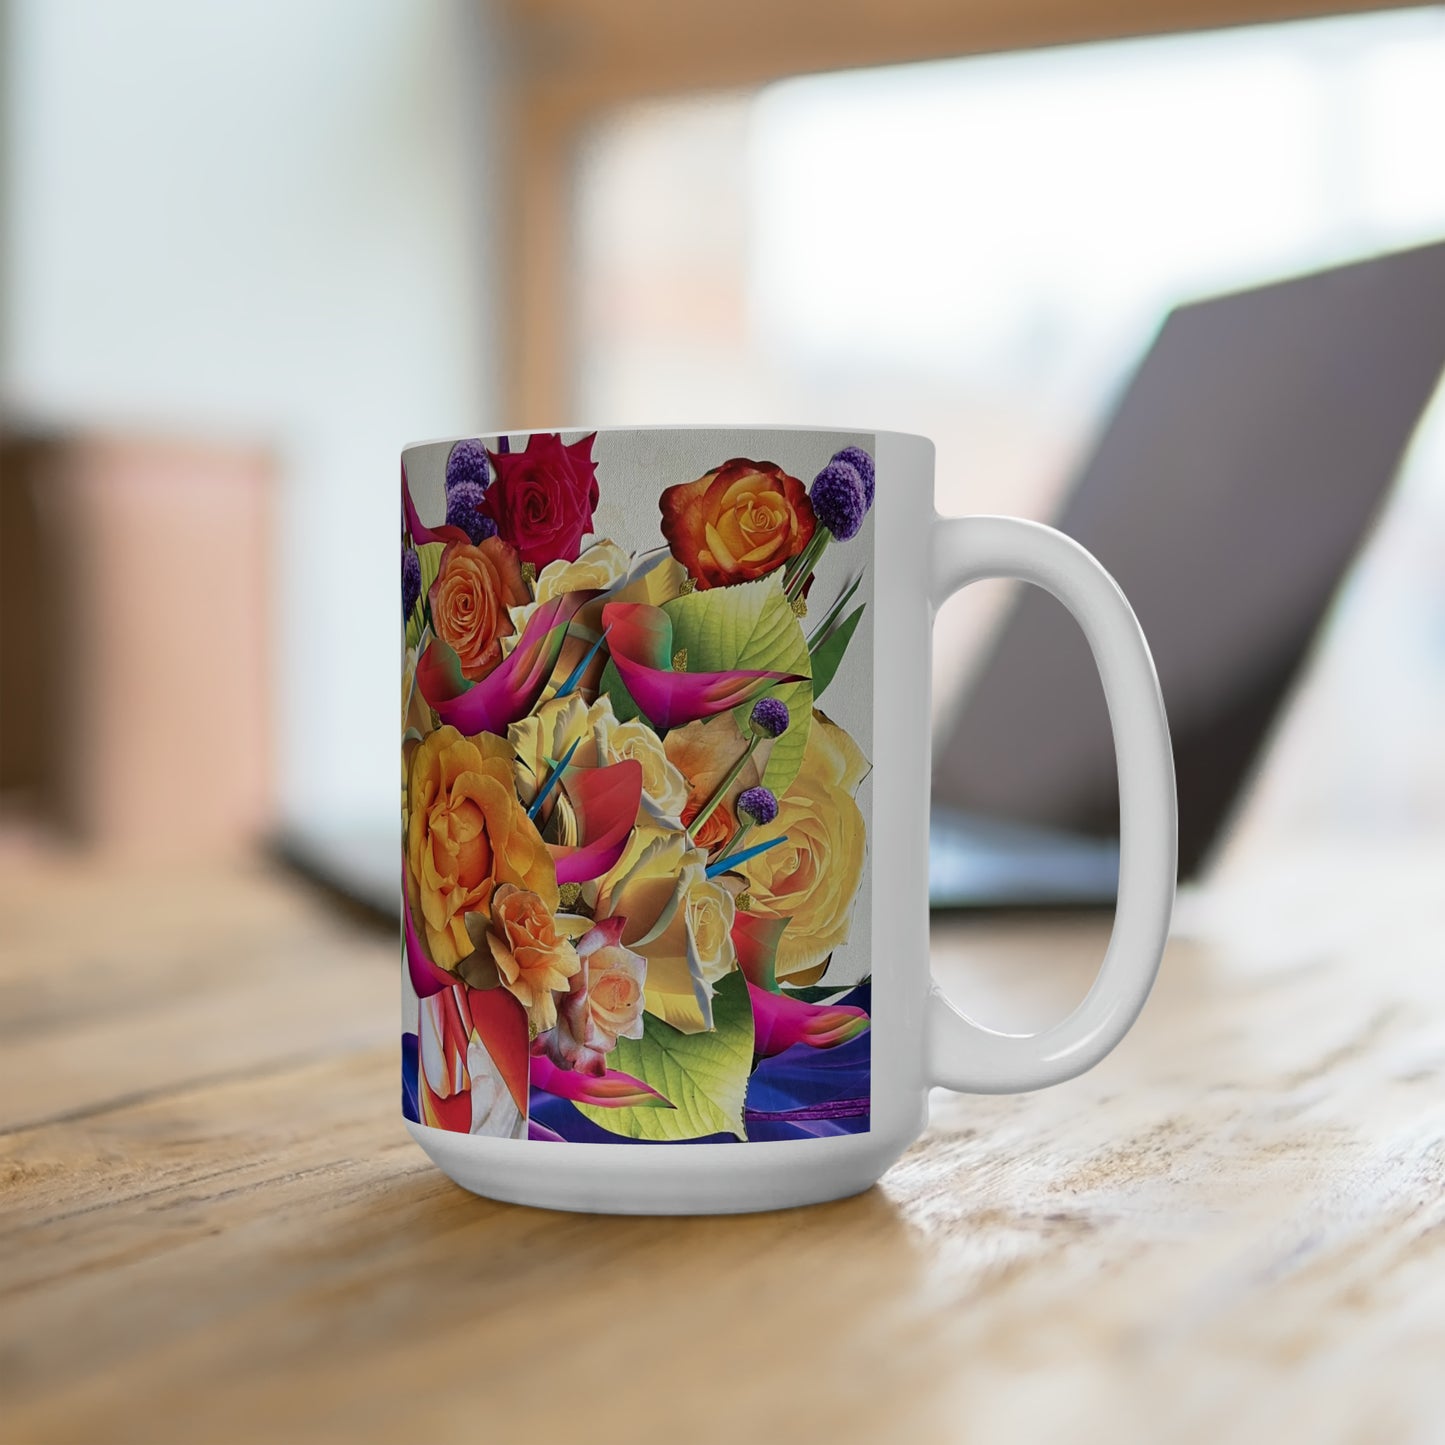 Floral Explosion Ceramic Mug